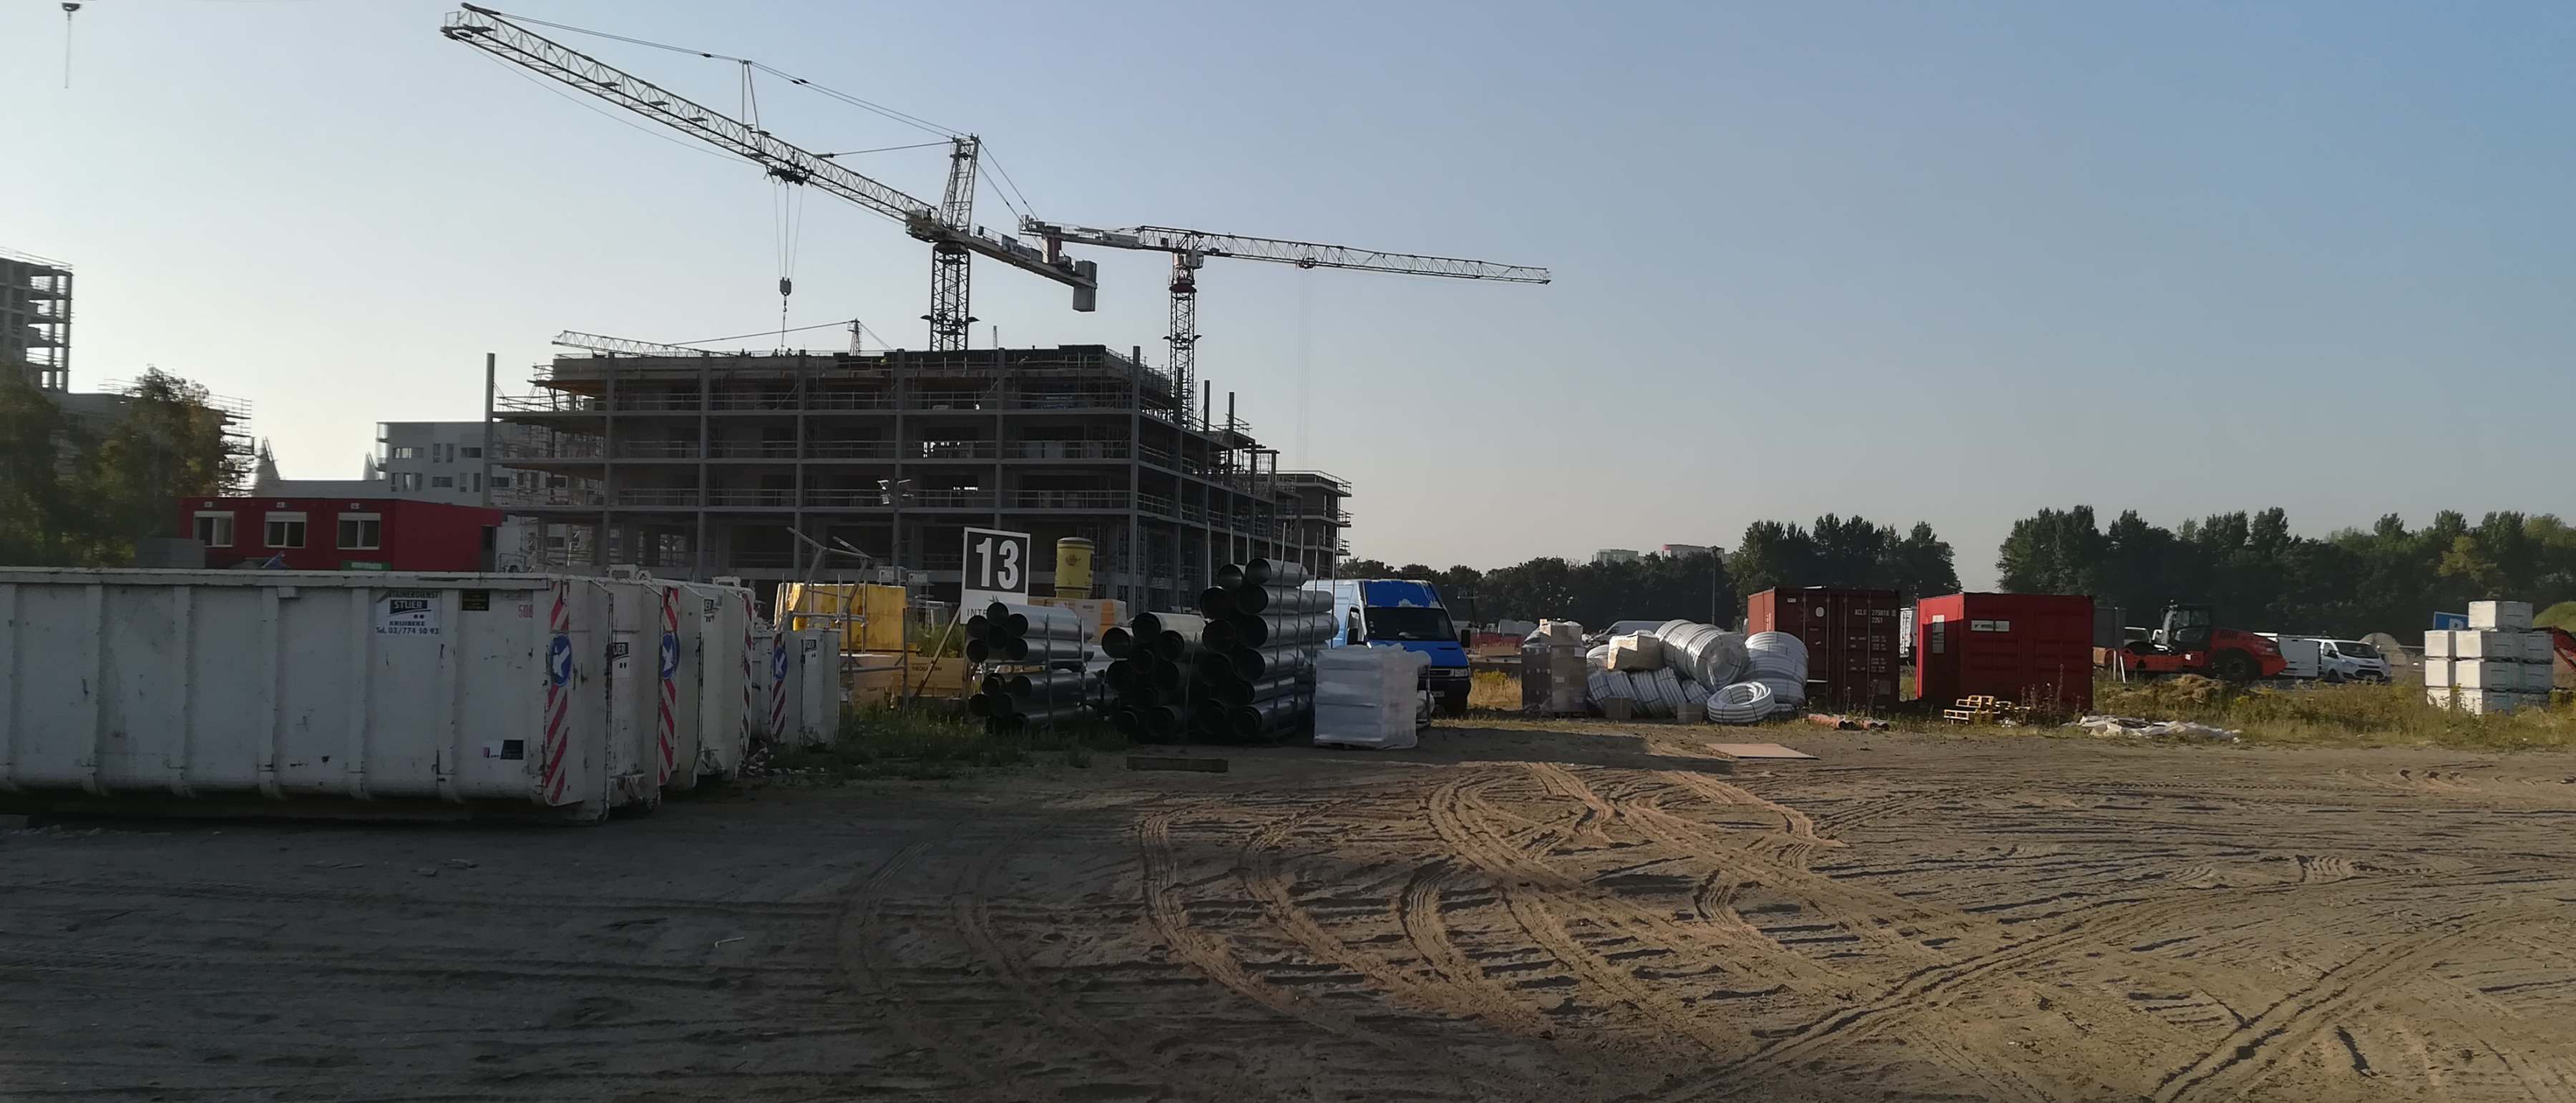 Bemalingsstudie Nieuw Zuid te Antwerpen | AGT